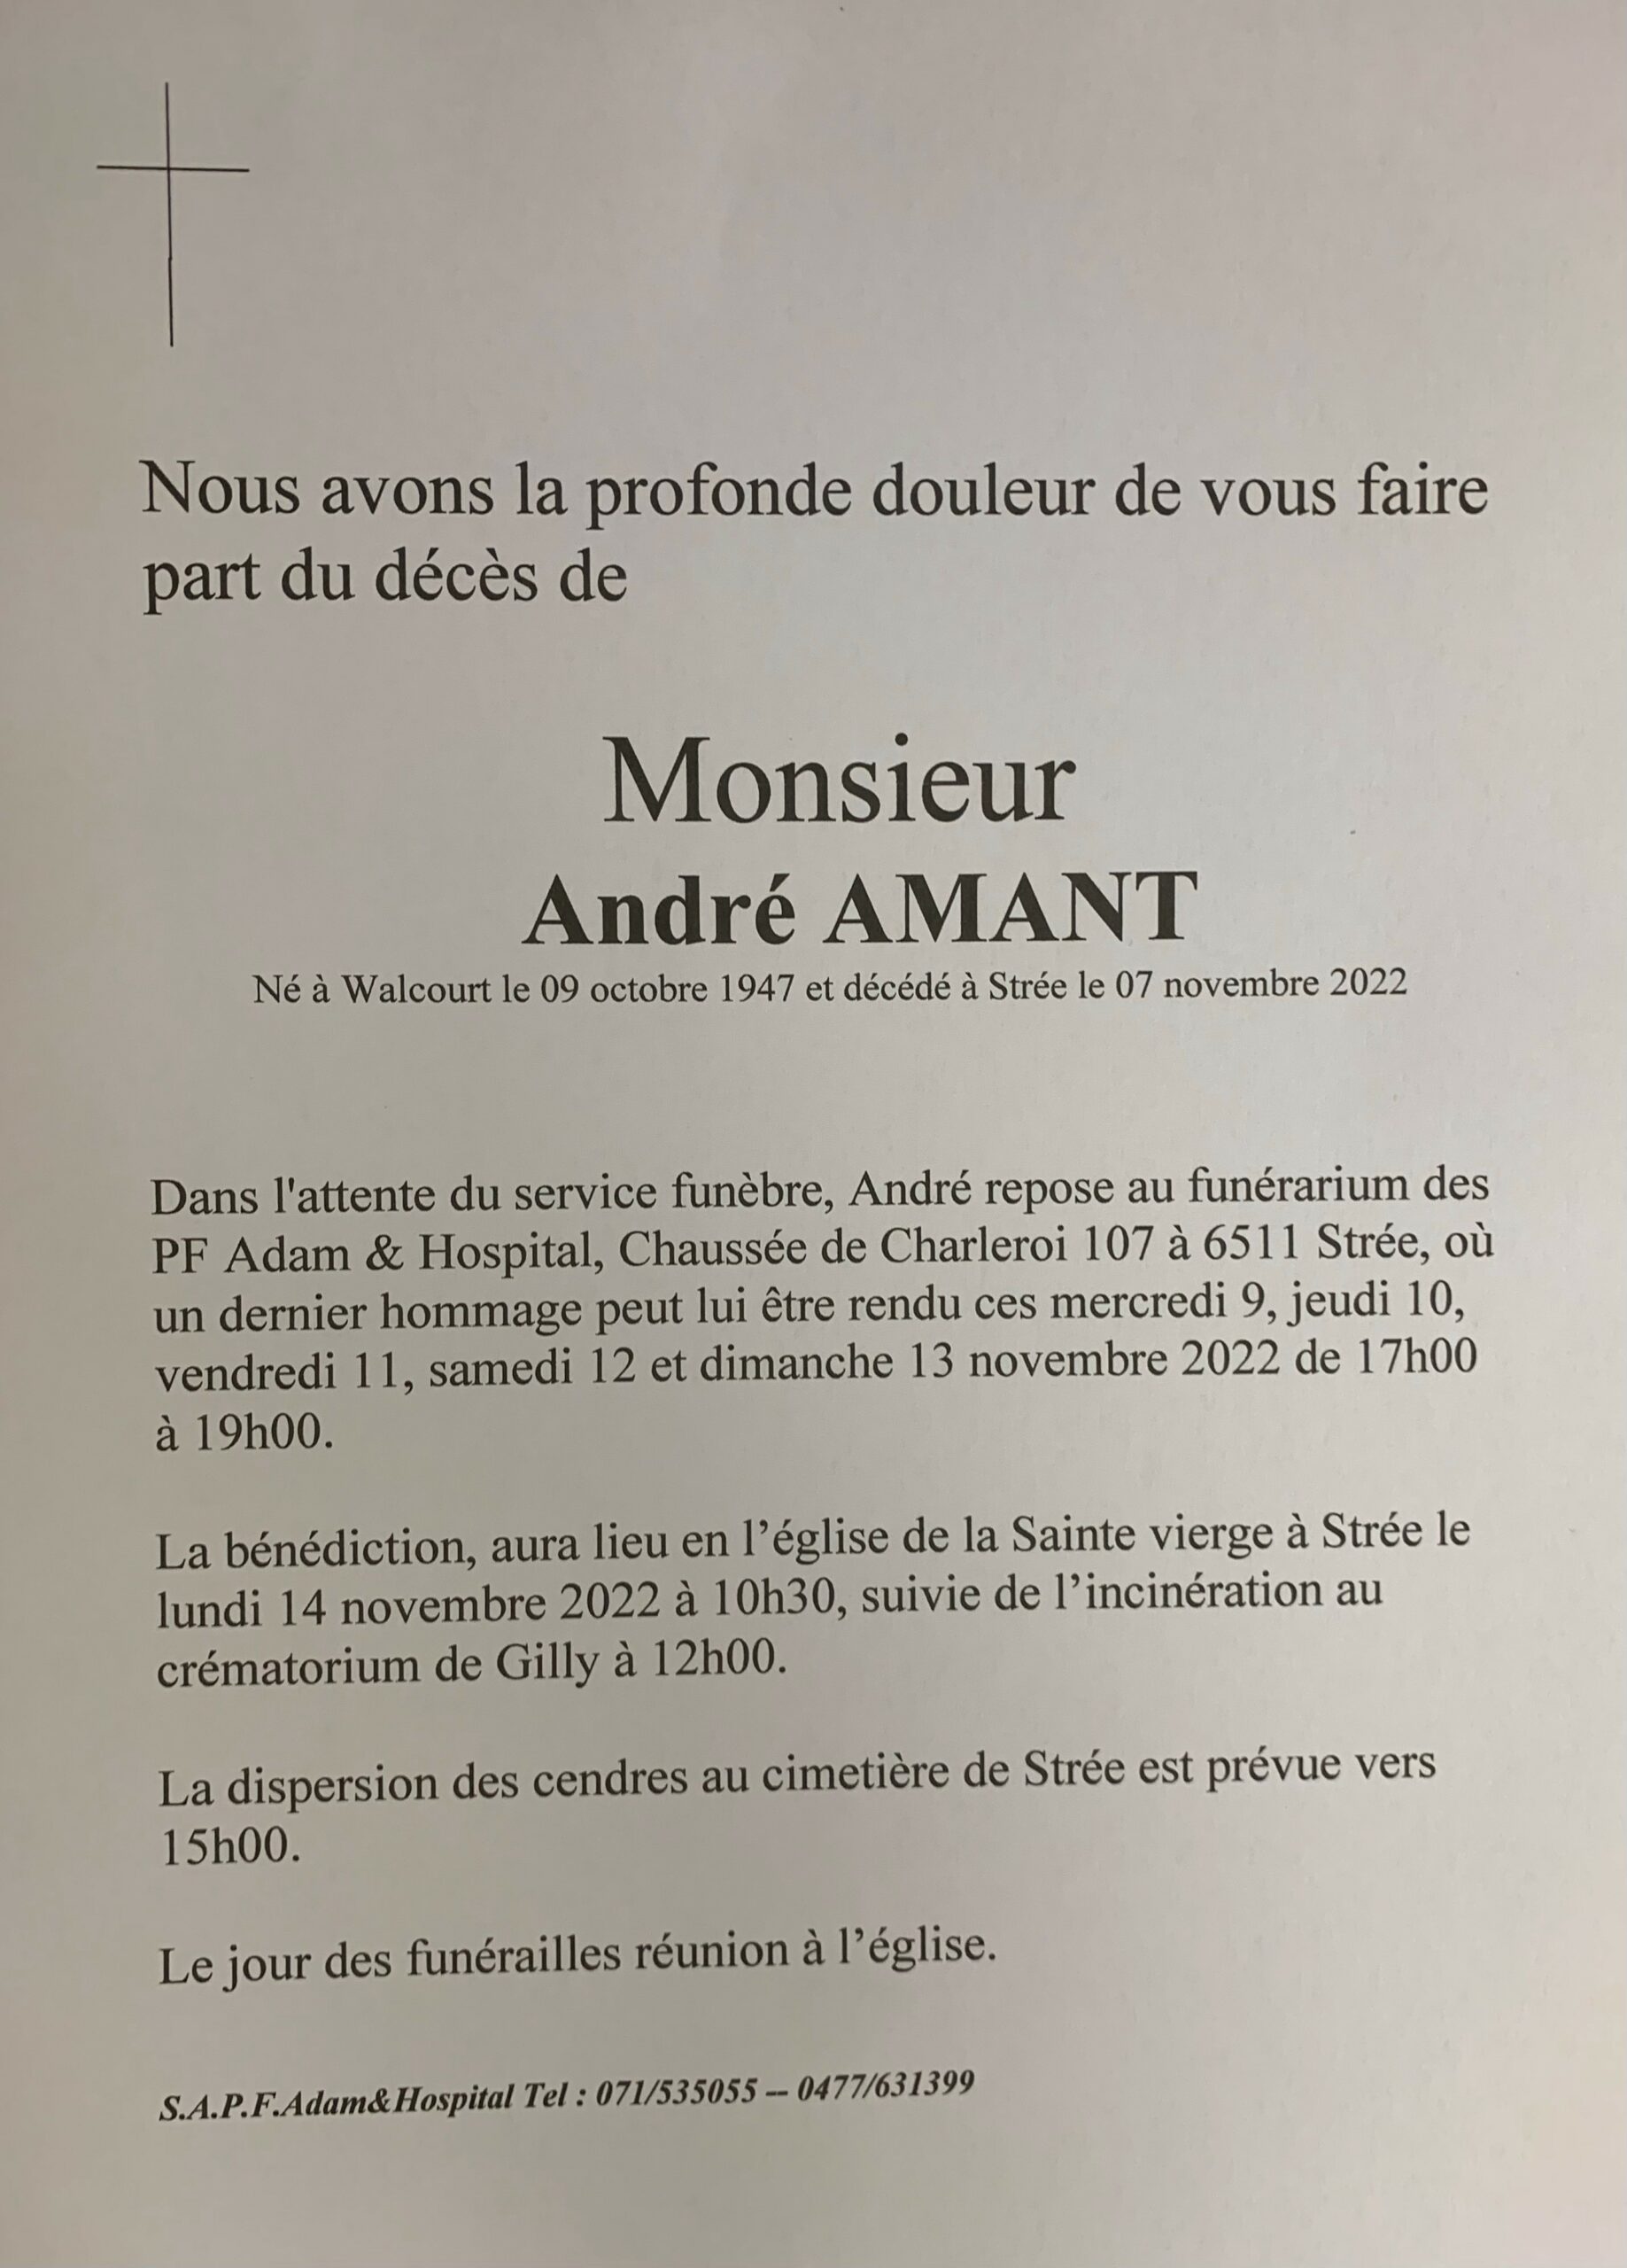 Monsieur Andre Amant scaled | Funérailles Adam Hospital